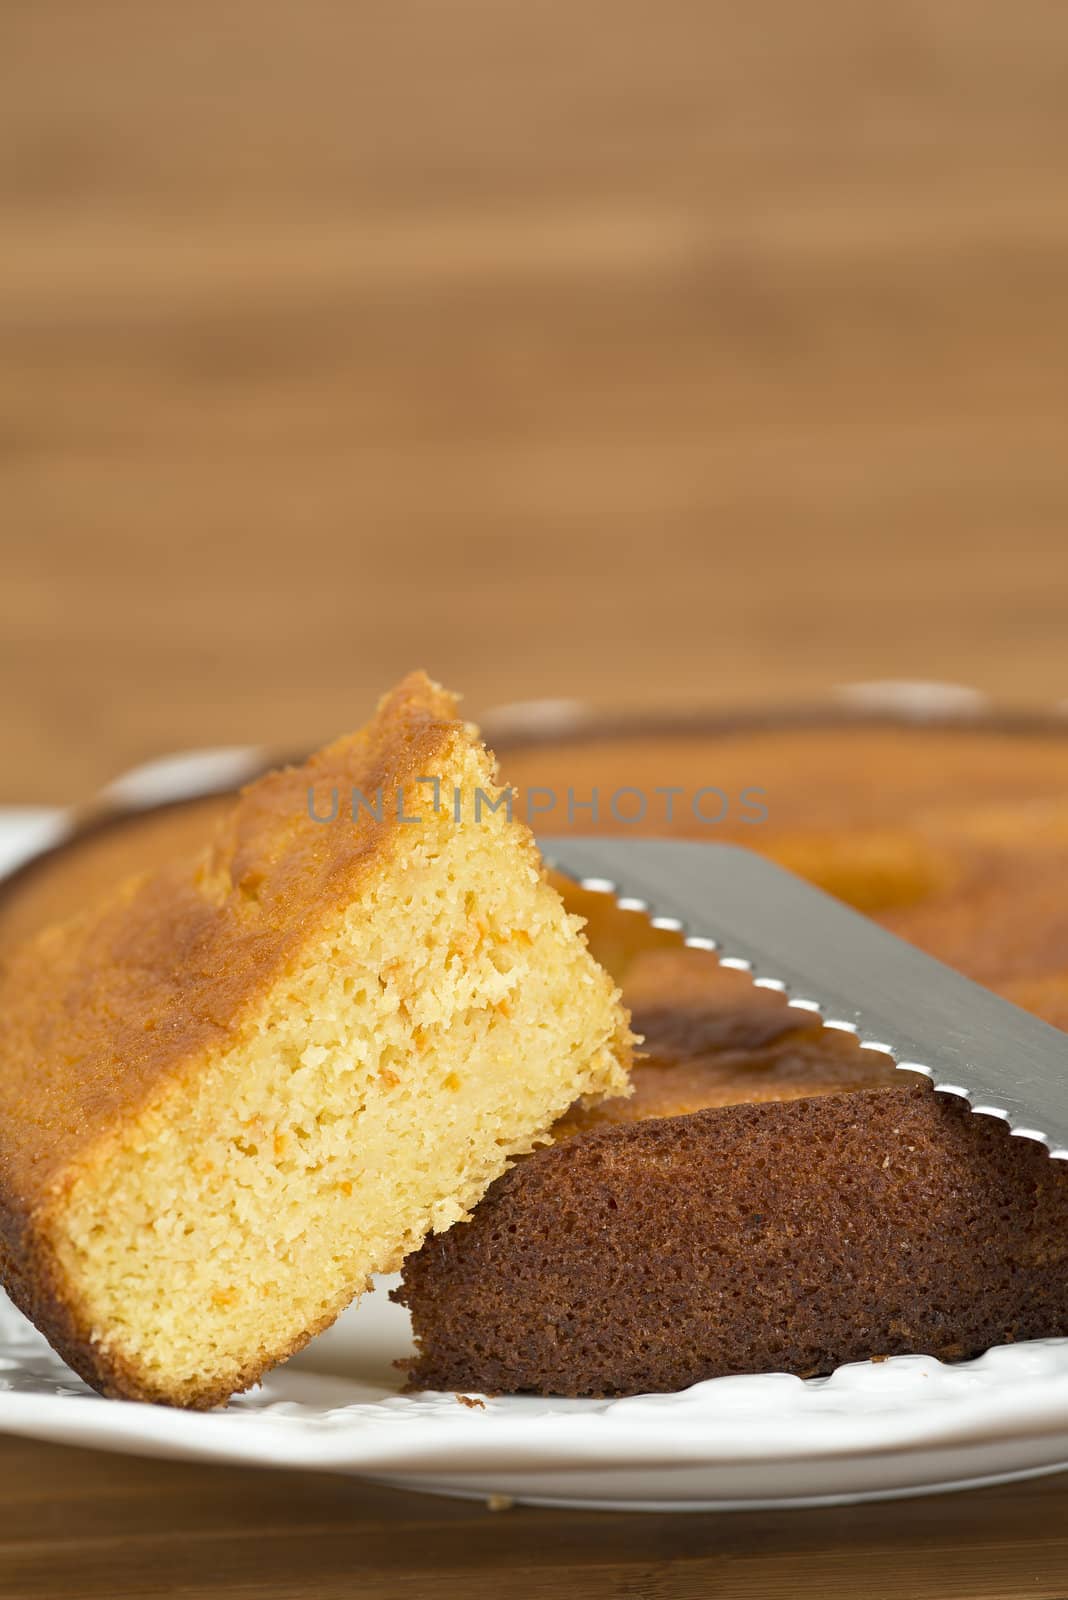 Homemade cake by angelsimon